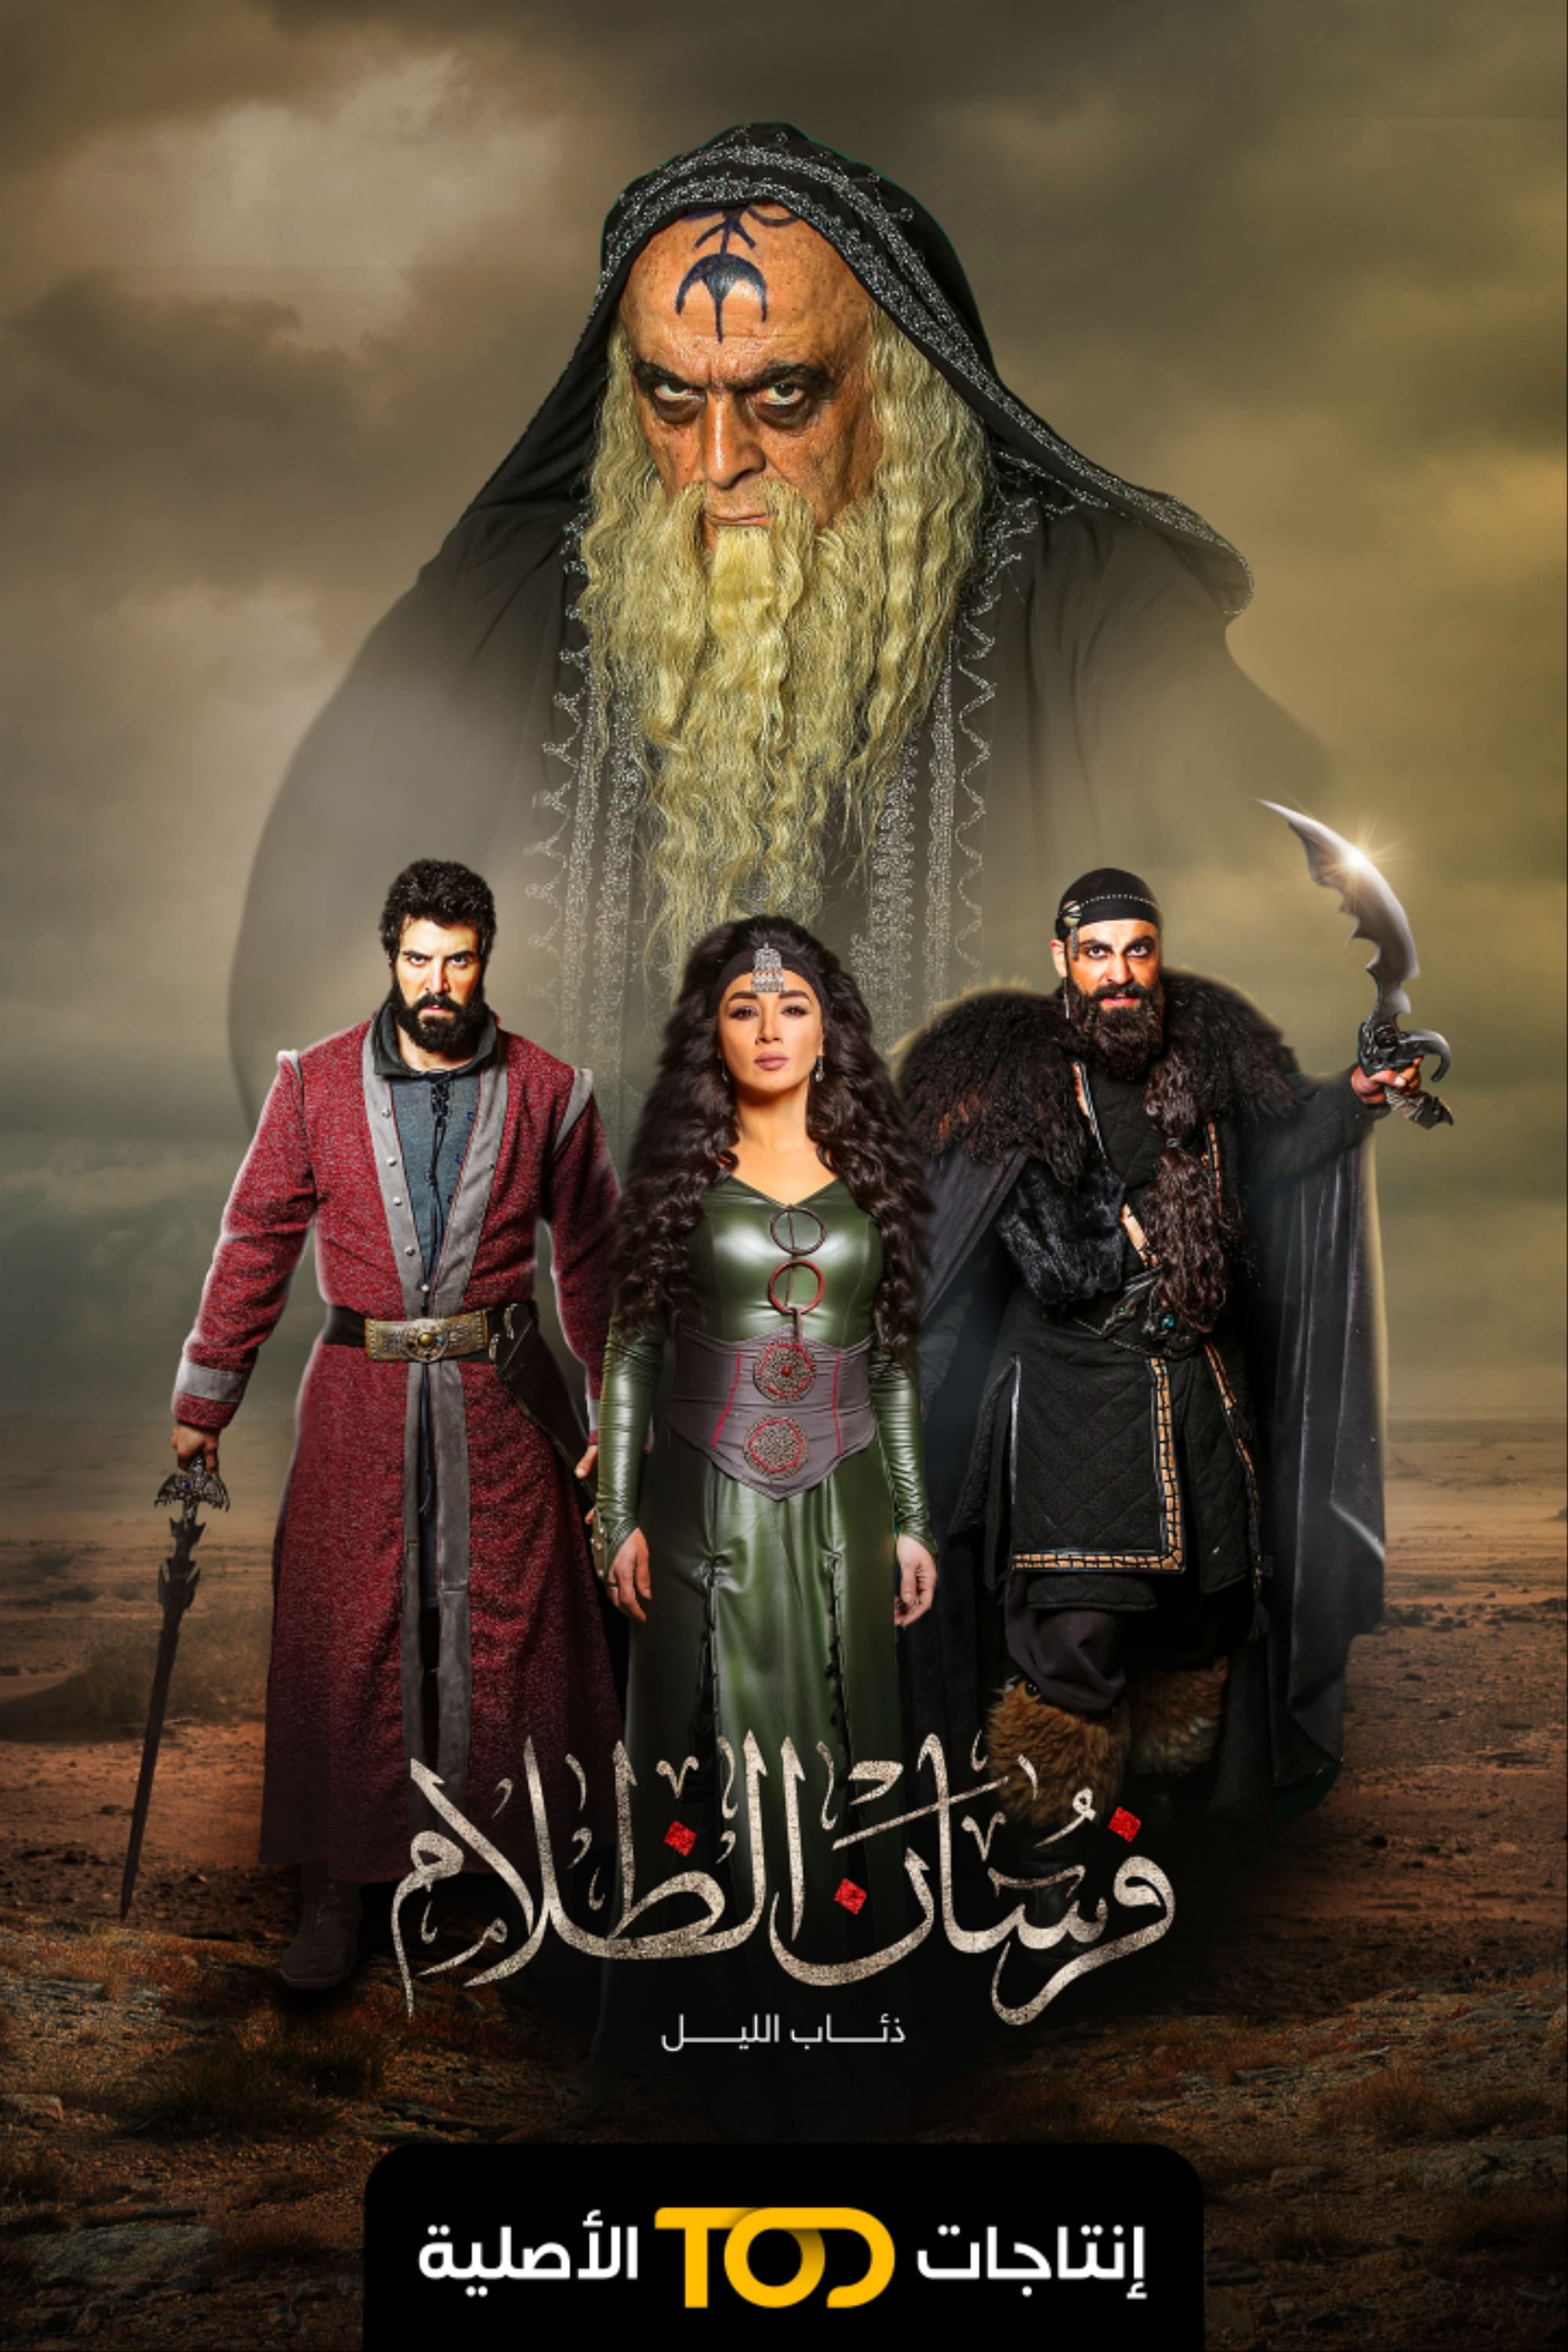 TV ratings for فرسان الظلام in Turkey. TOD TV series